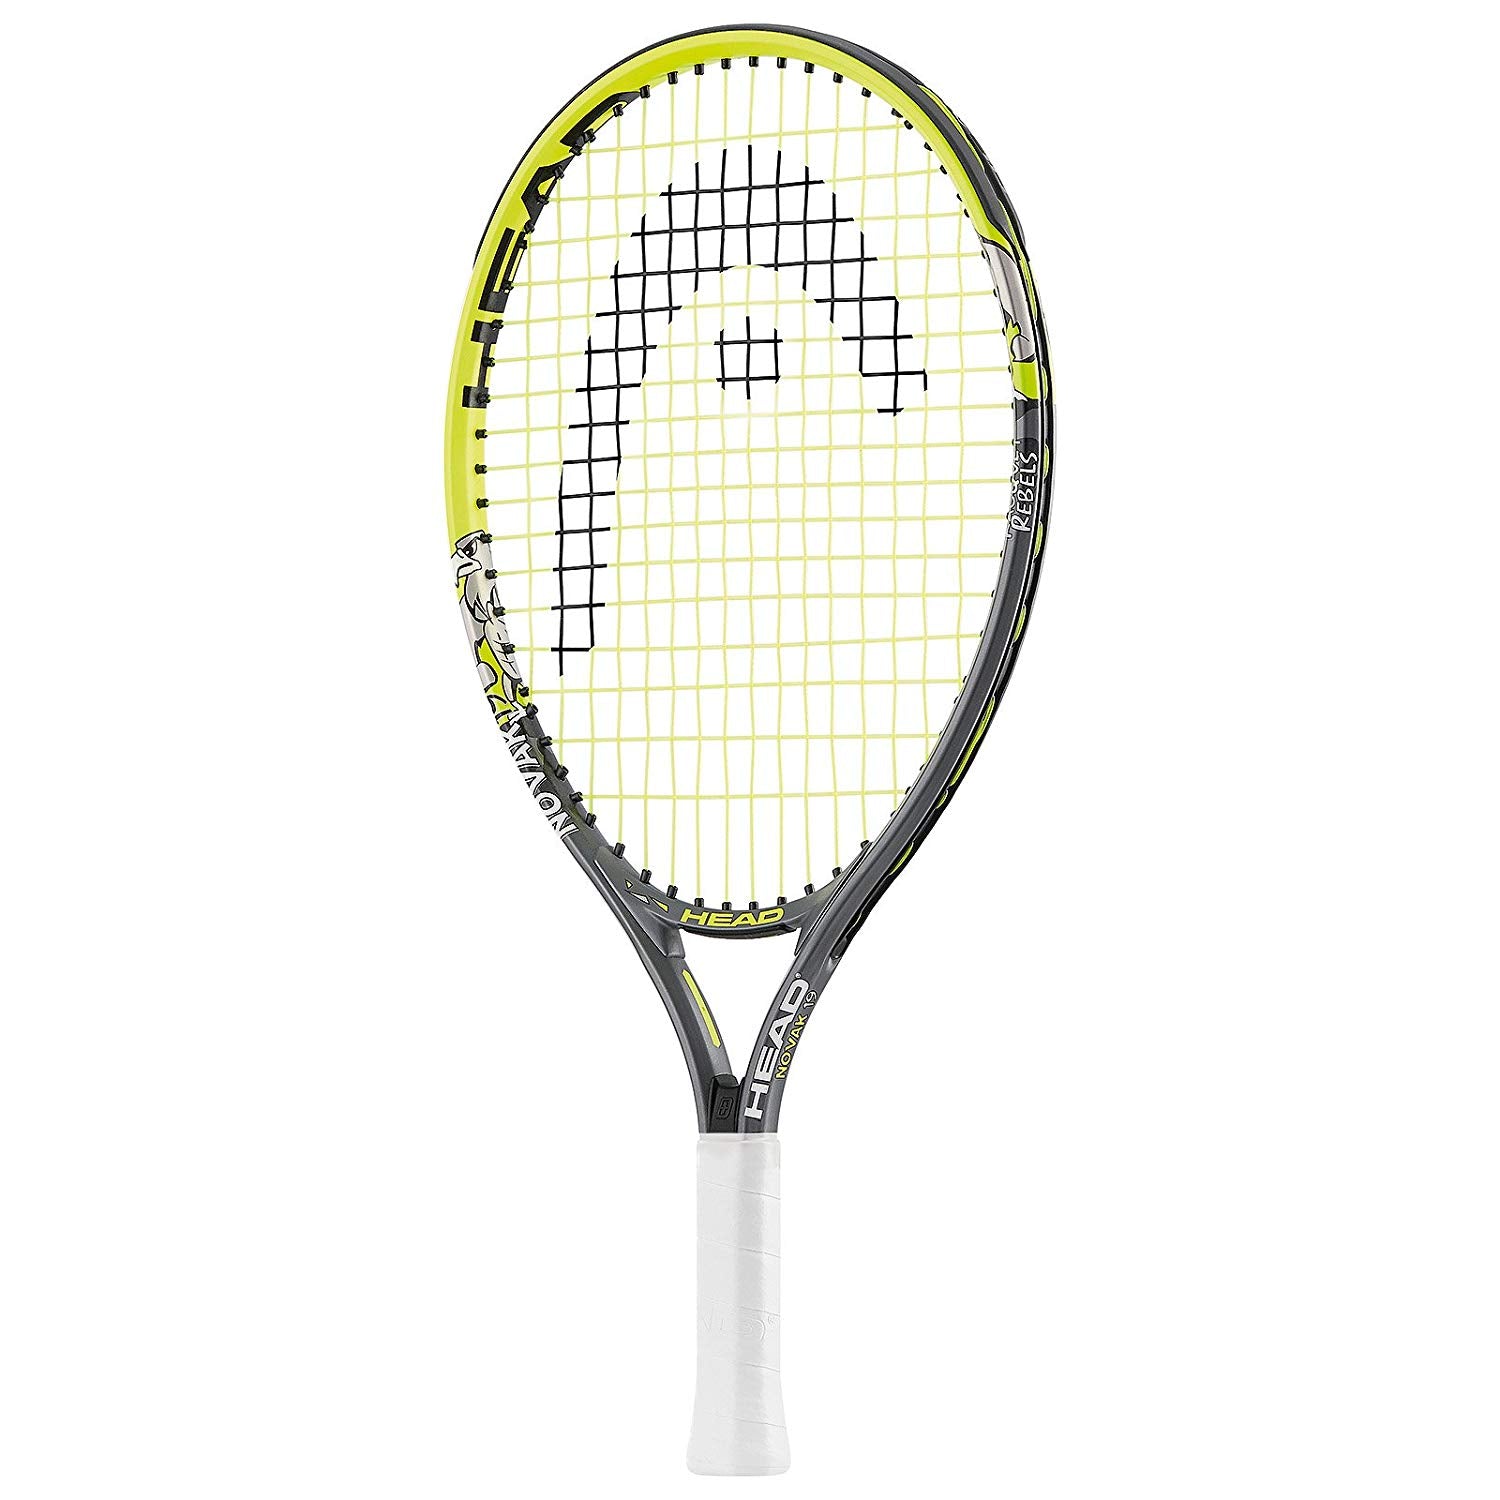 Head 232972 Novak Aluminum Tennis Racquet, Junior 23-inch (Yellow/Black) - Best Price online Prokicksports.com